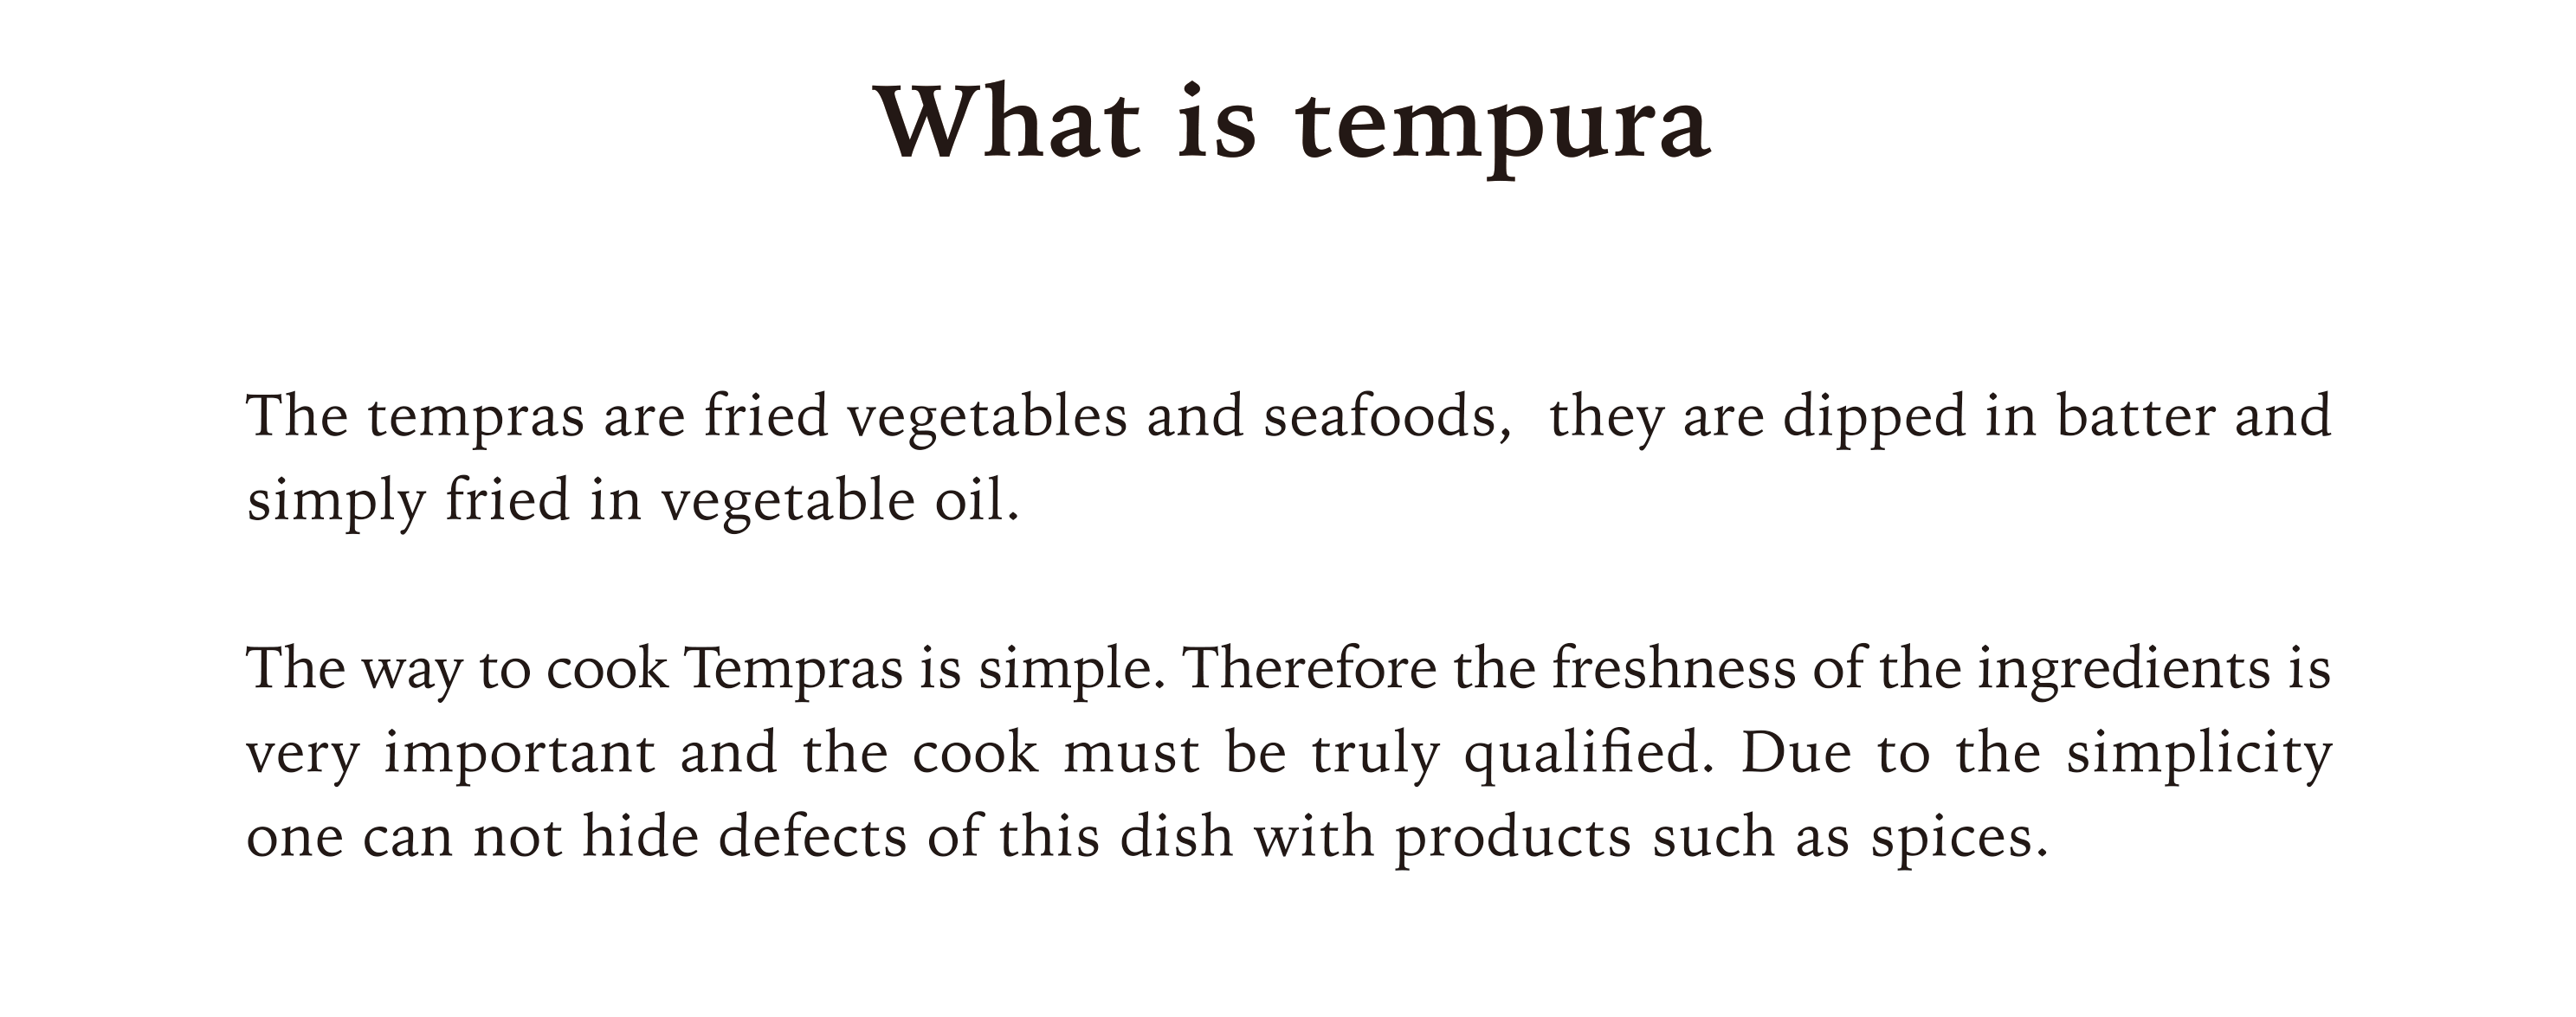 What is tempura